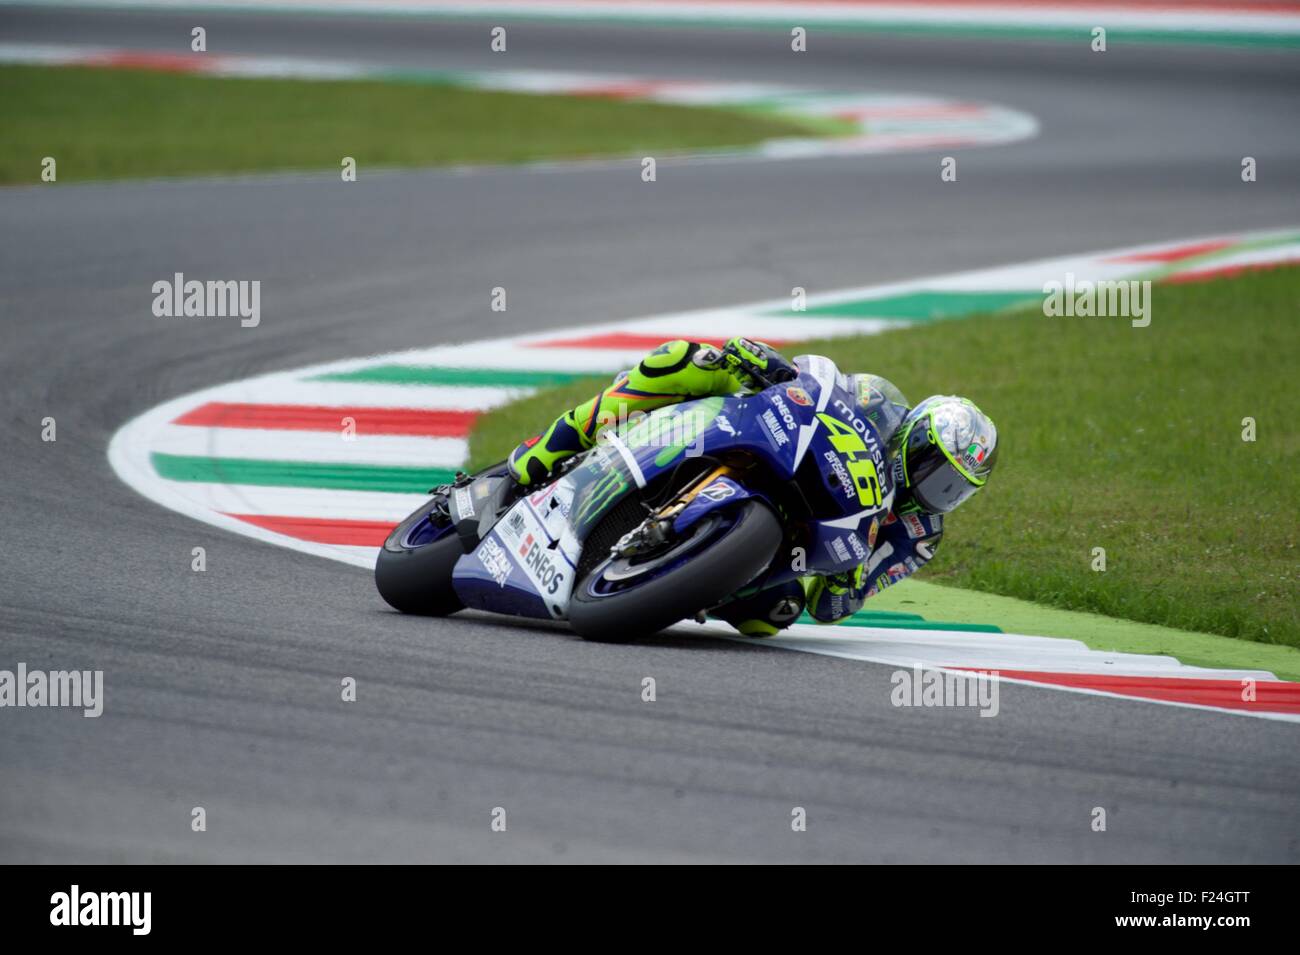 Mugello Circuit, Italy 30th May 2015. Valentino Rossi the Movistar Yamaha rider during qualifying for the Gran Premio D'Italia a Stock Photo